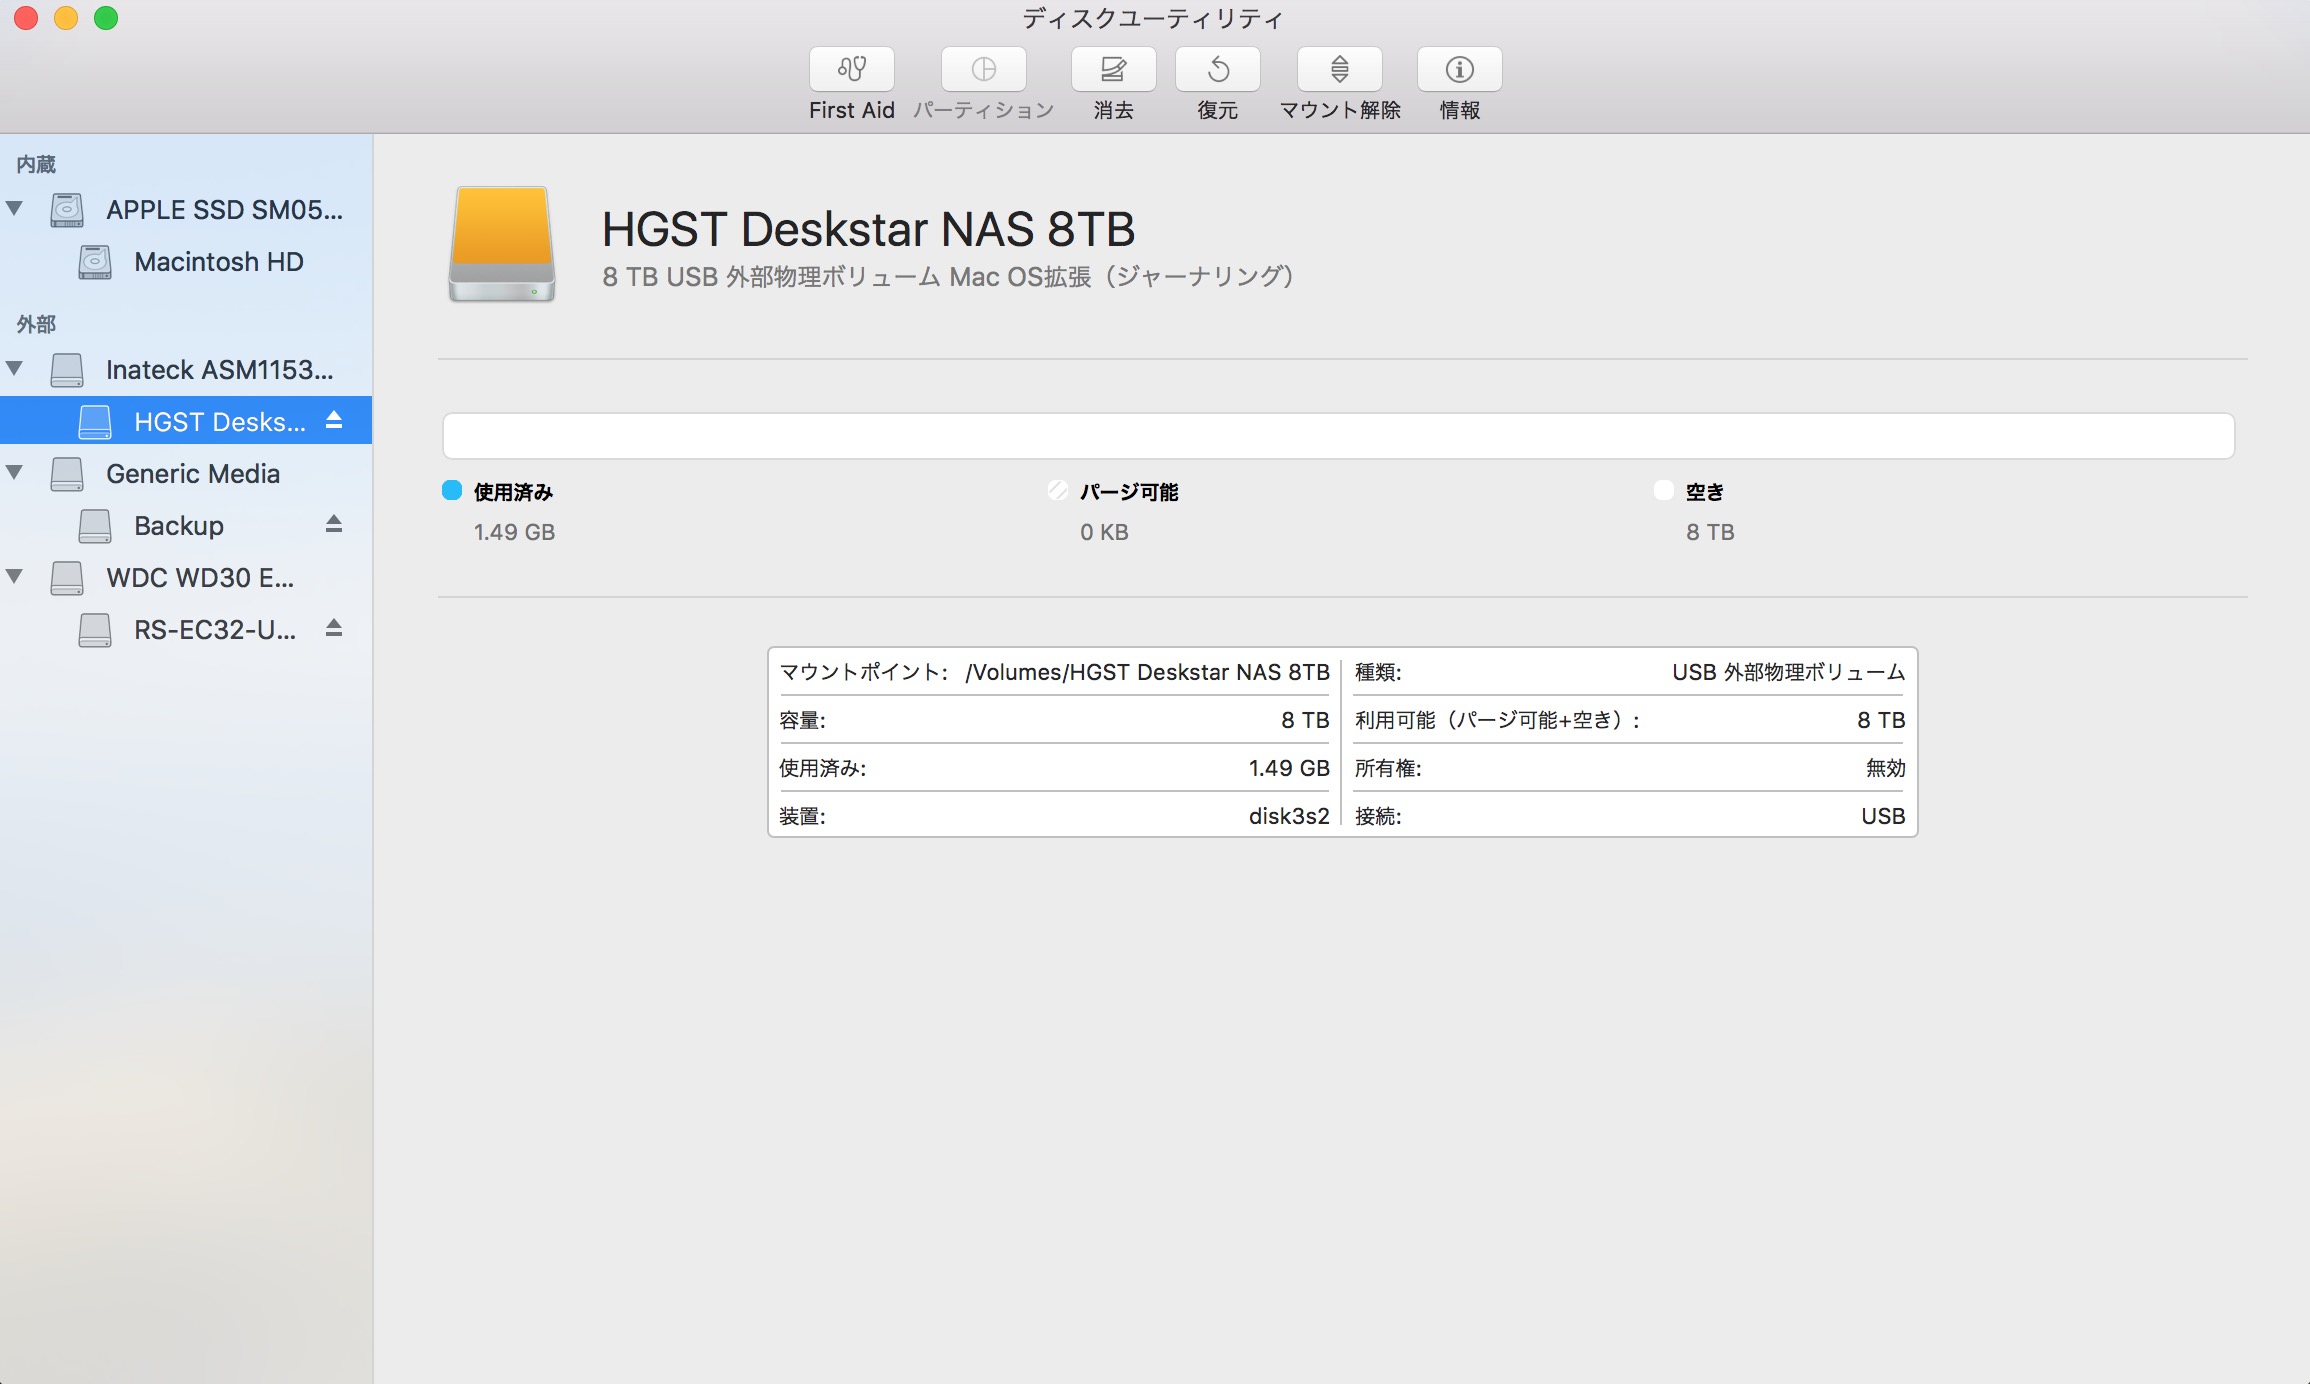 HGST Deskstar NAS 8TB名称変更完了